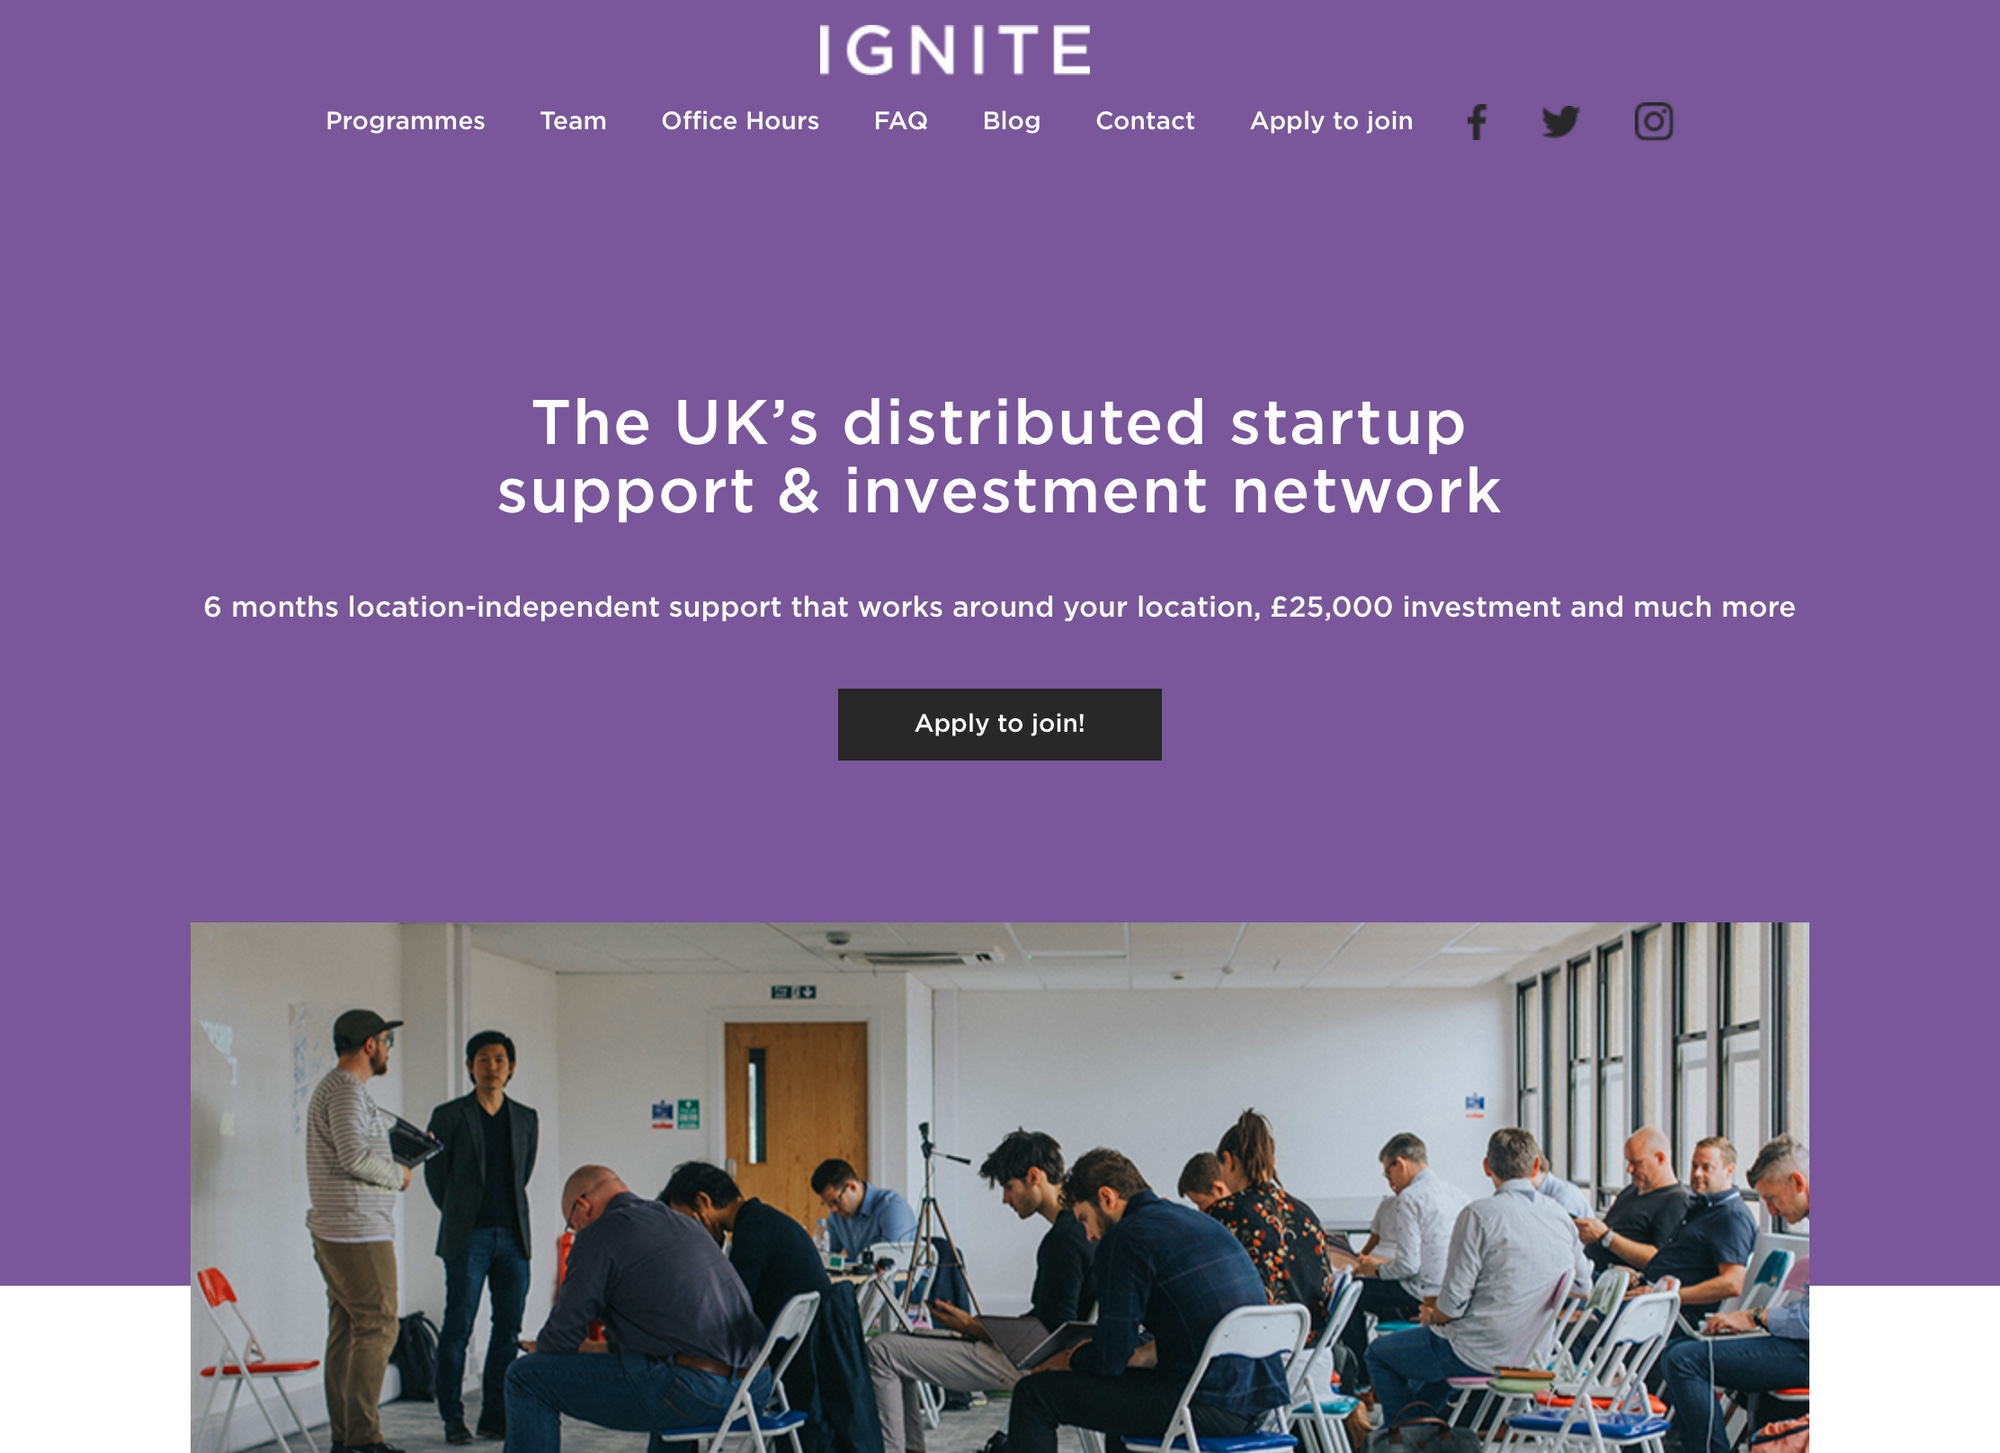 The Ignite website